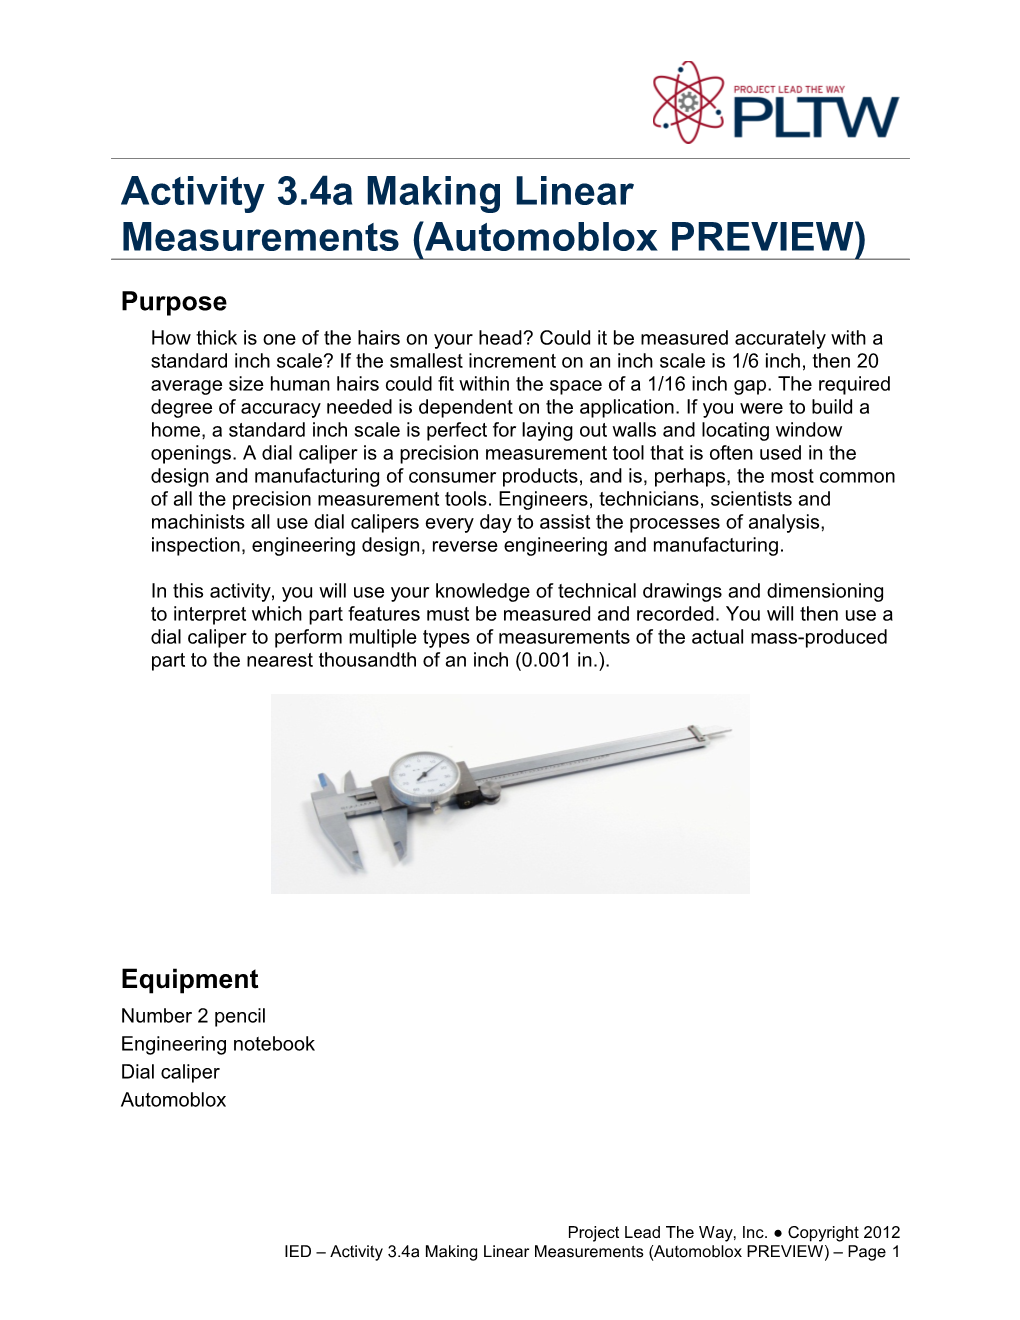 Activity 3.4A Making Linear Measurements (Automoblox PREVIEW)